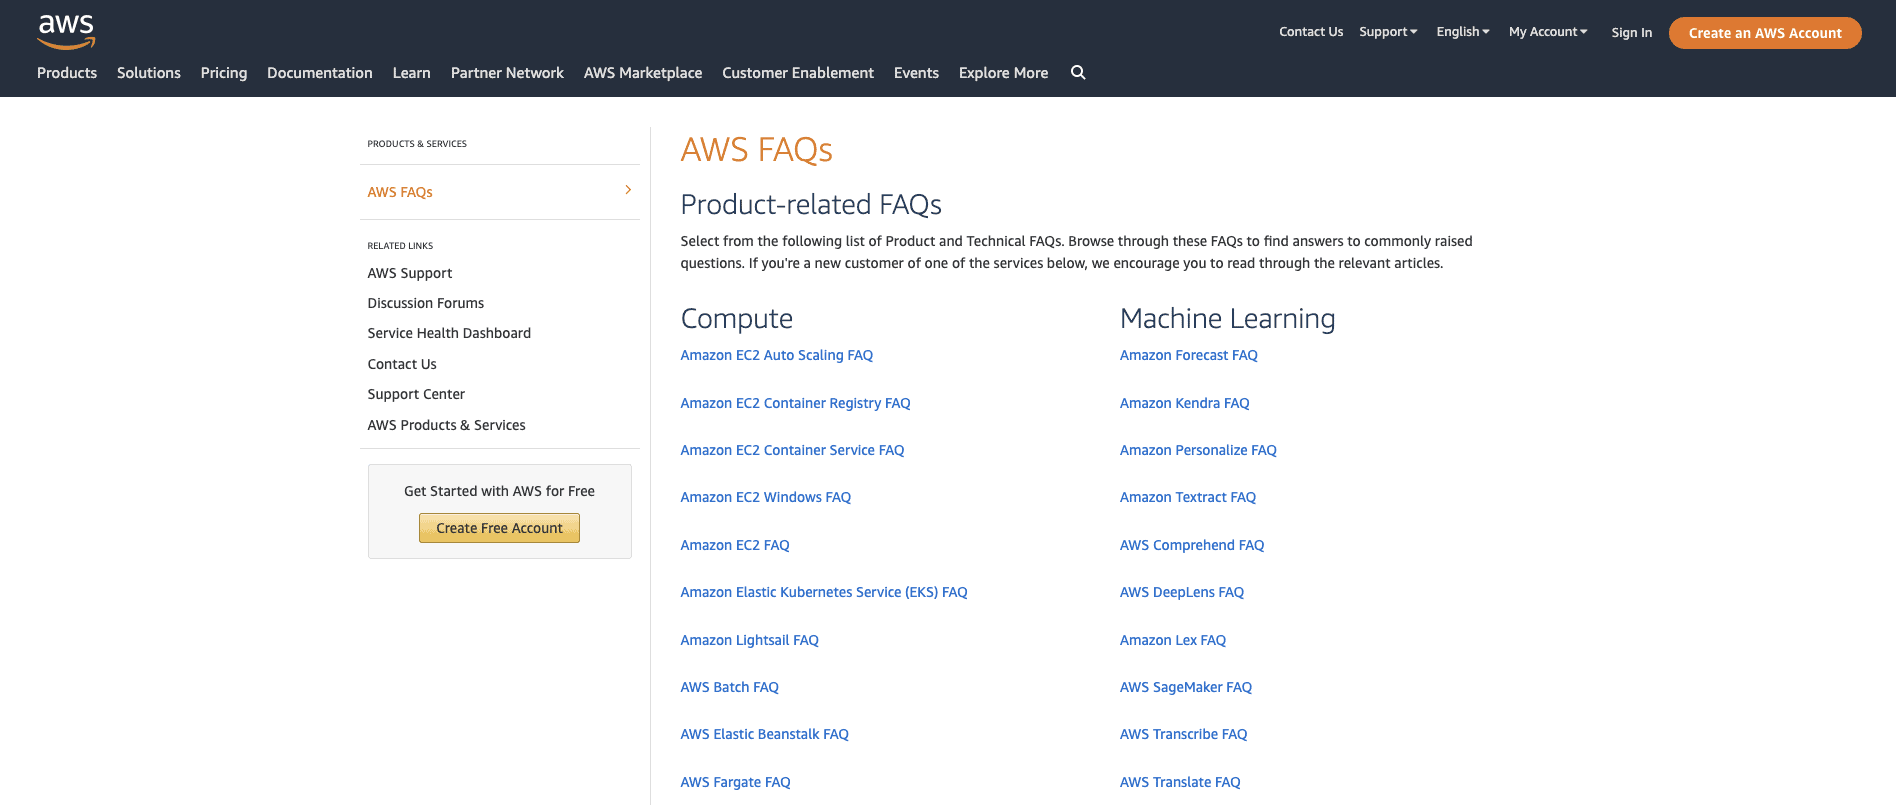 Amazon Web Services FAQs